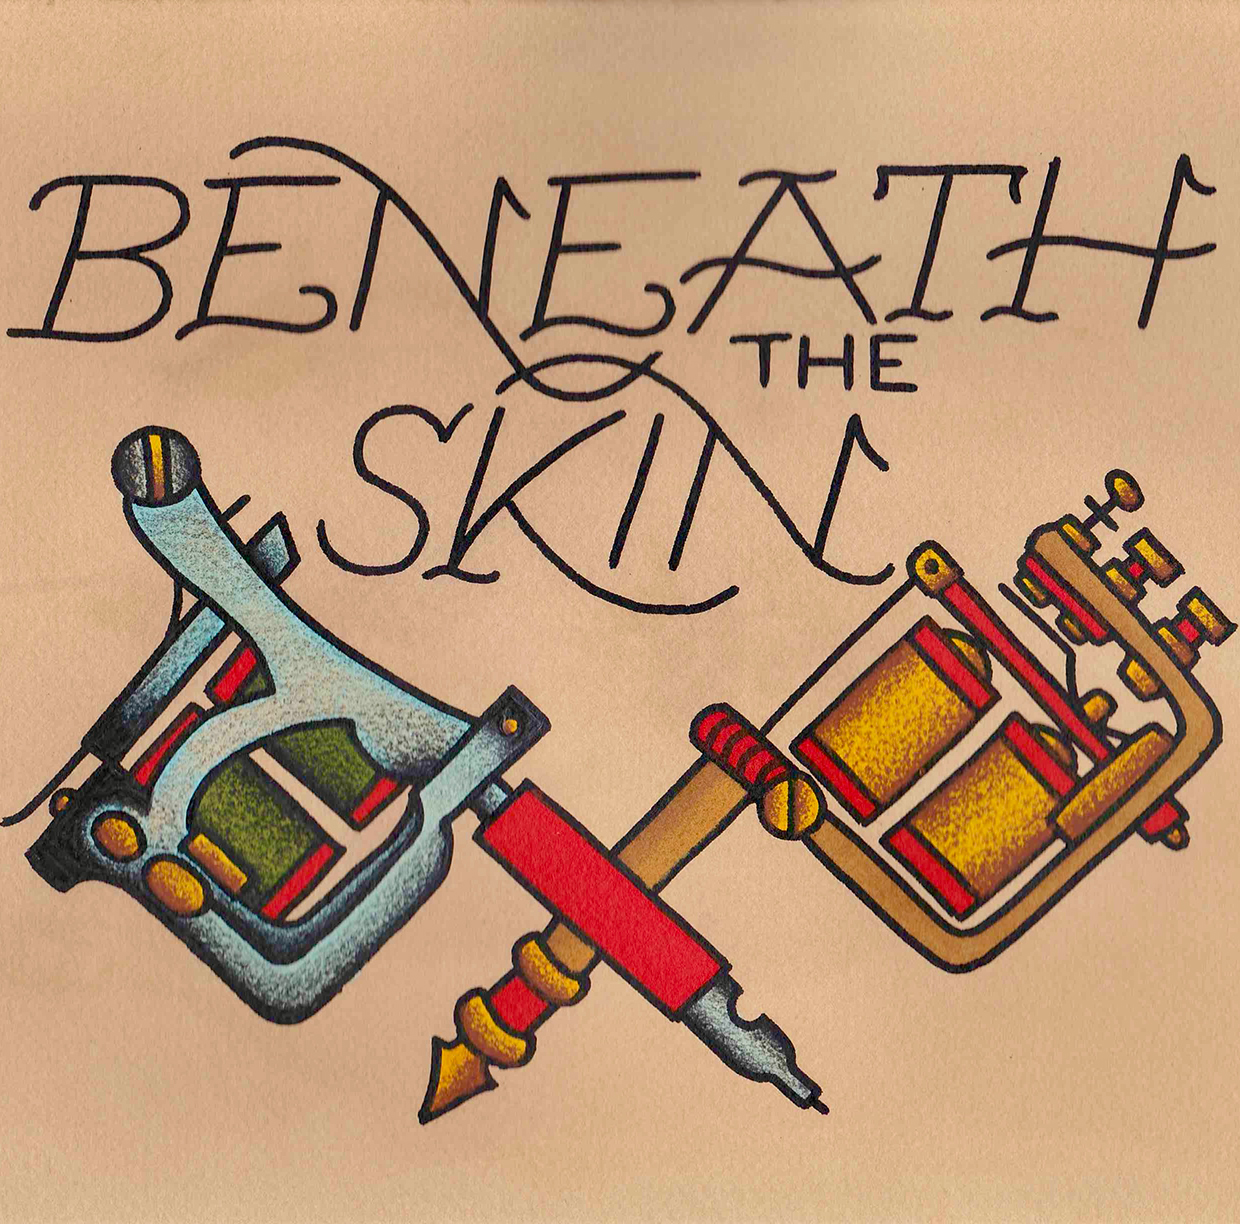 Akimitsu Takagi on the Beneath the Skin podcast